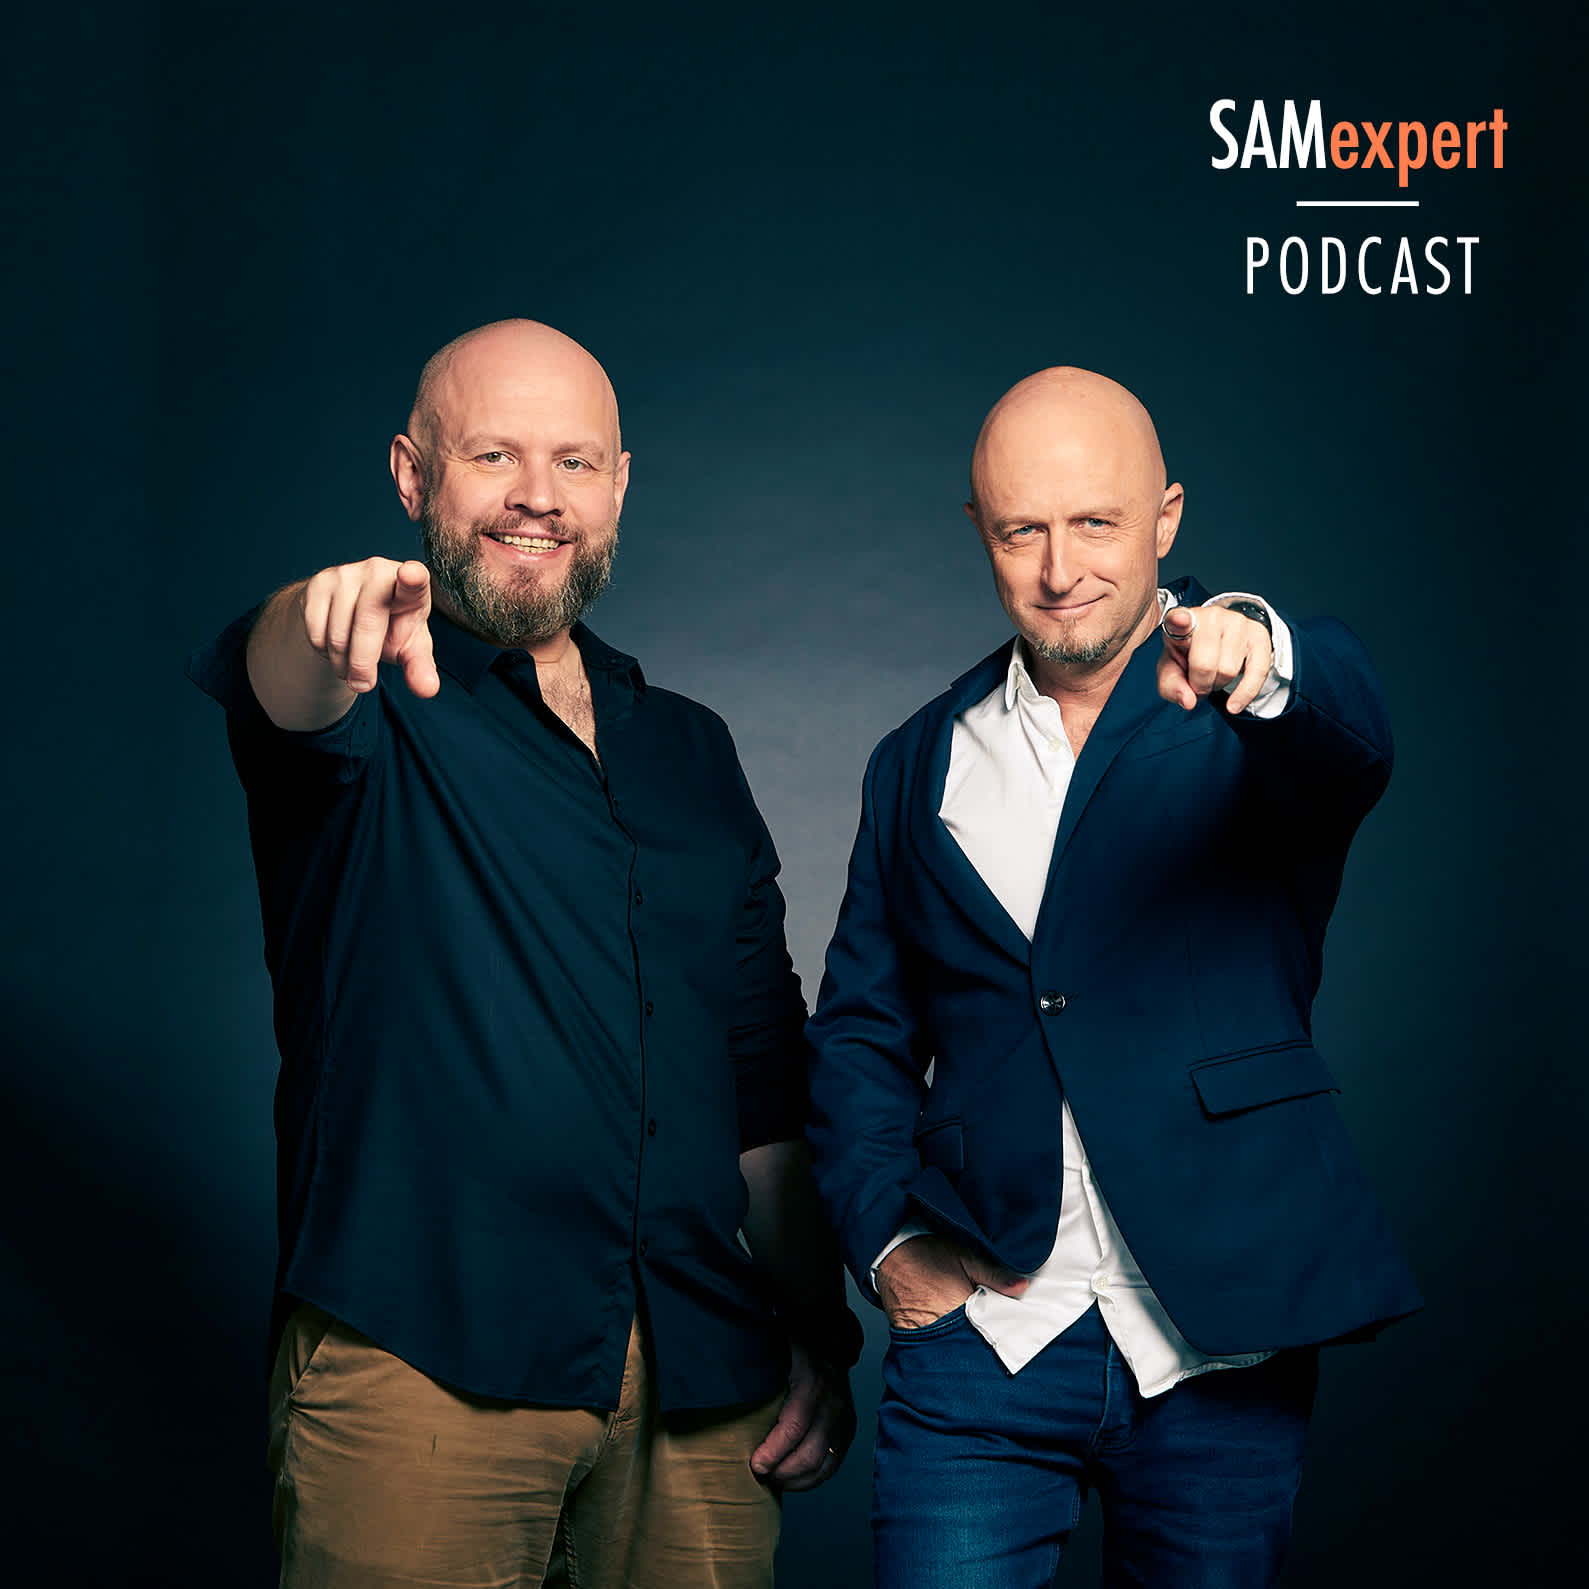 SAMexpert Podcast